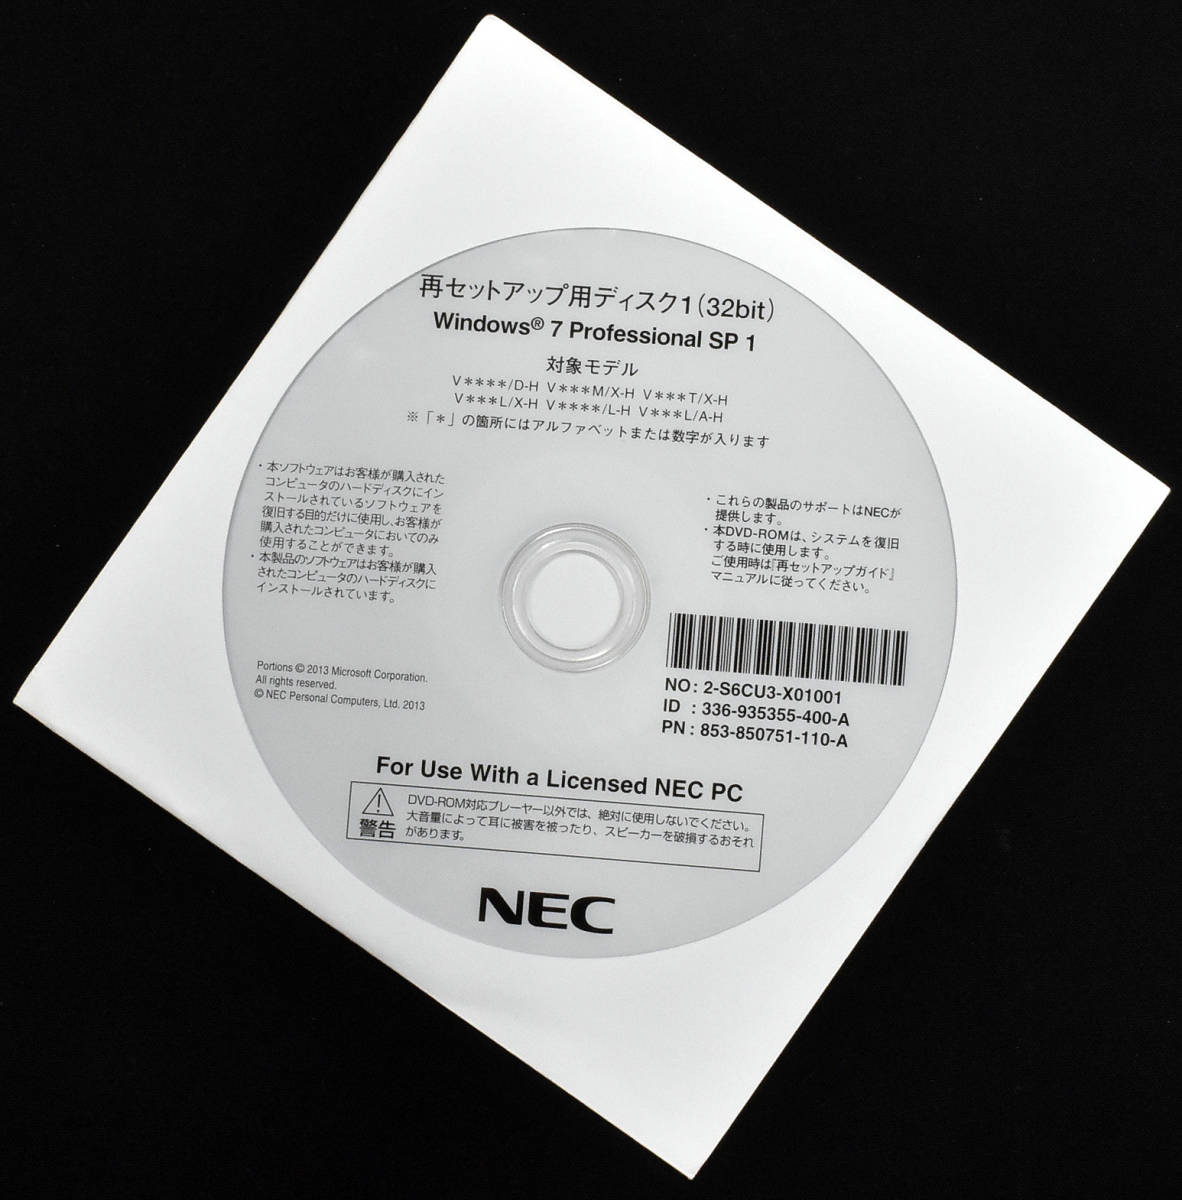 NEC 再セットアップディスク1 (32bit) Windows 7 Professional SP 1 (PC-VK24LANDH 付属ディスク) (R02 x(9s(10Eの画像1